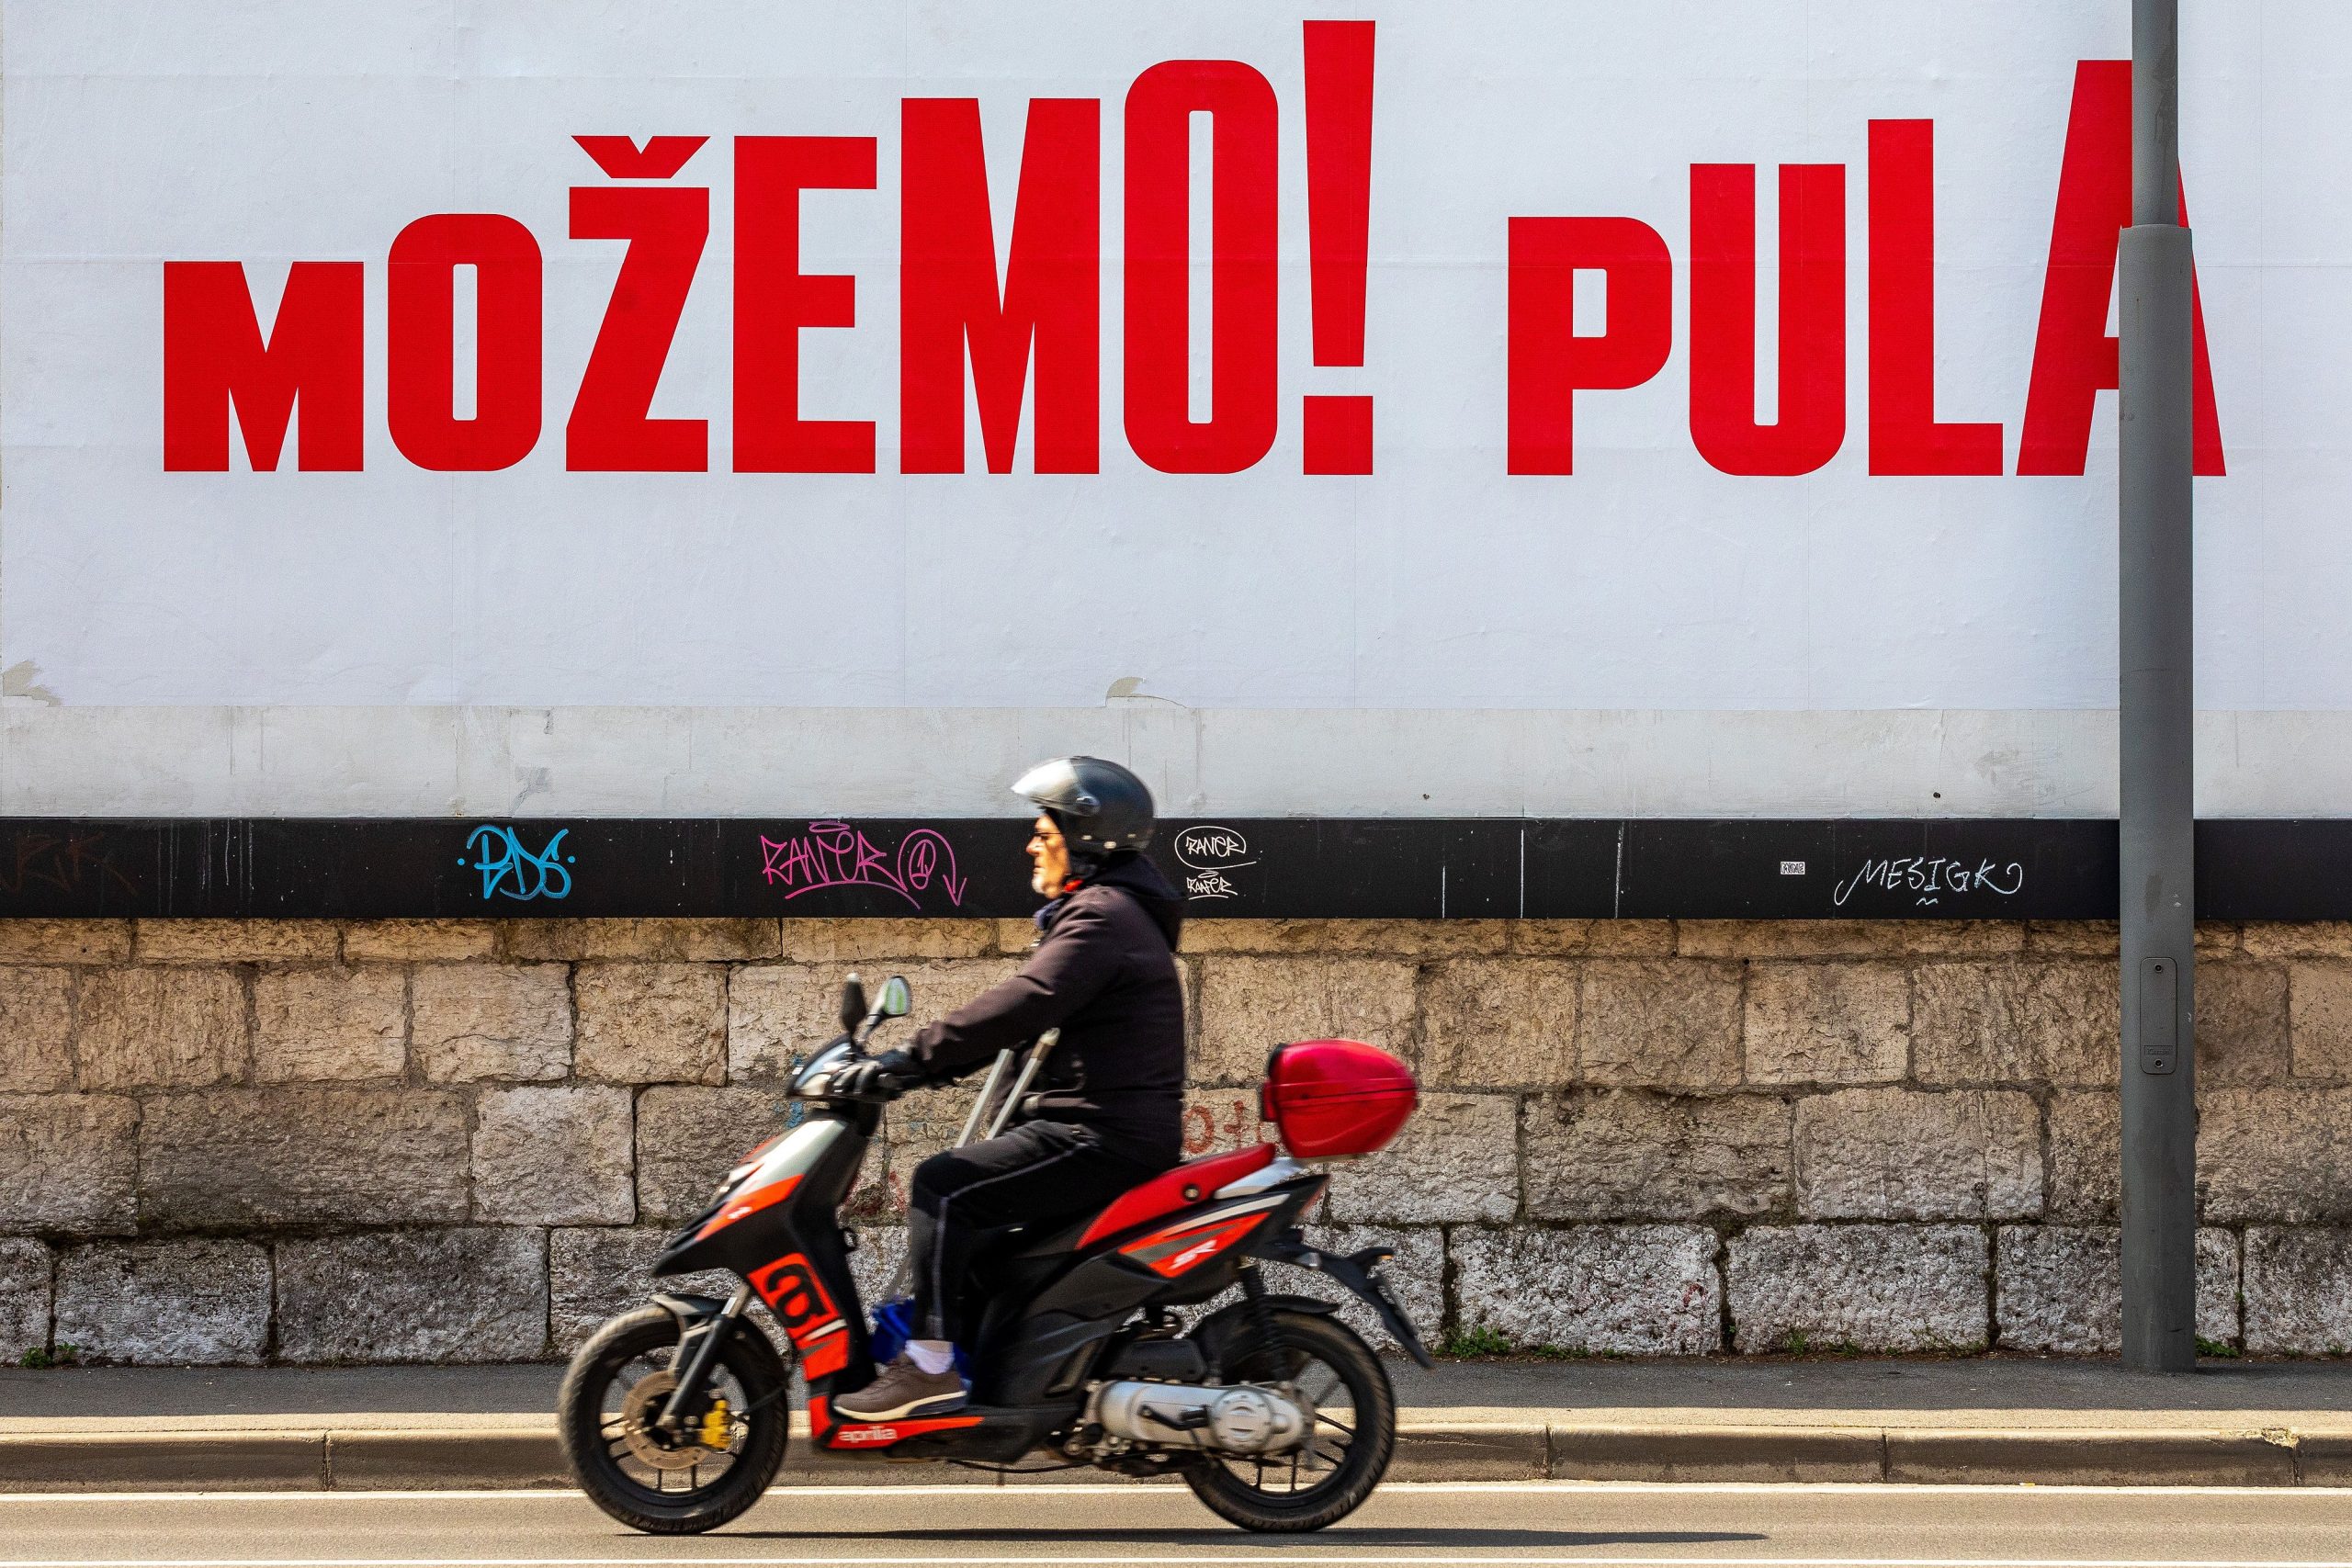 21.04.2021., Pula - Predizborni plakat platforme Mozemo!. 
Photo: Srecko Niketic/PIXSELL